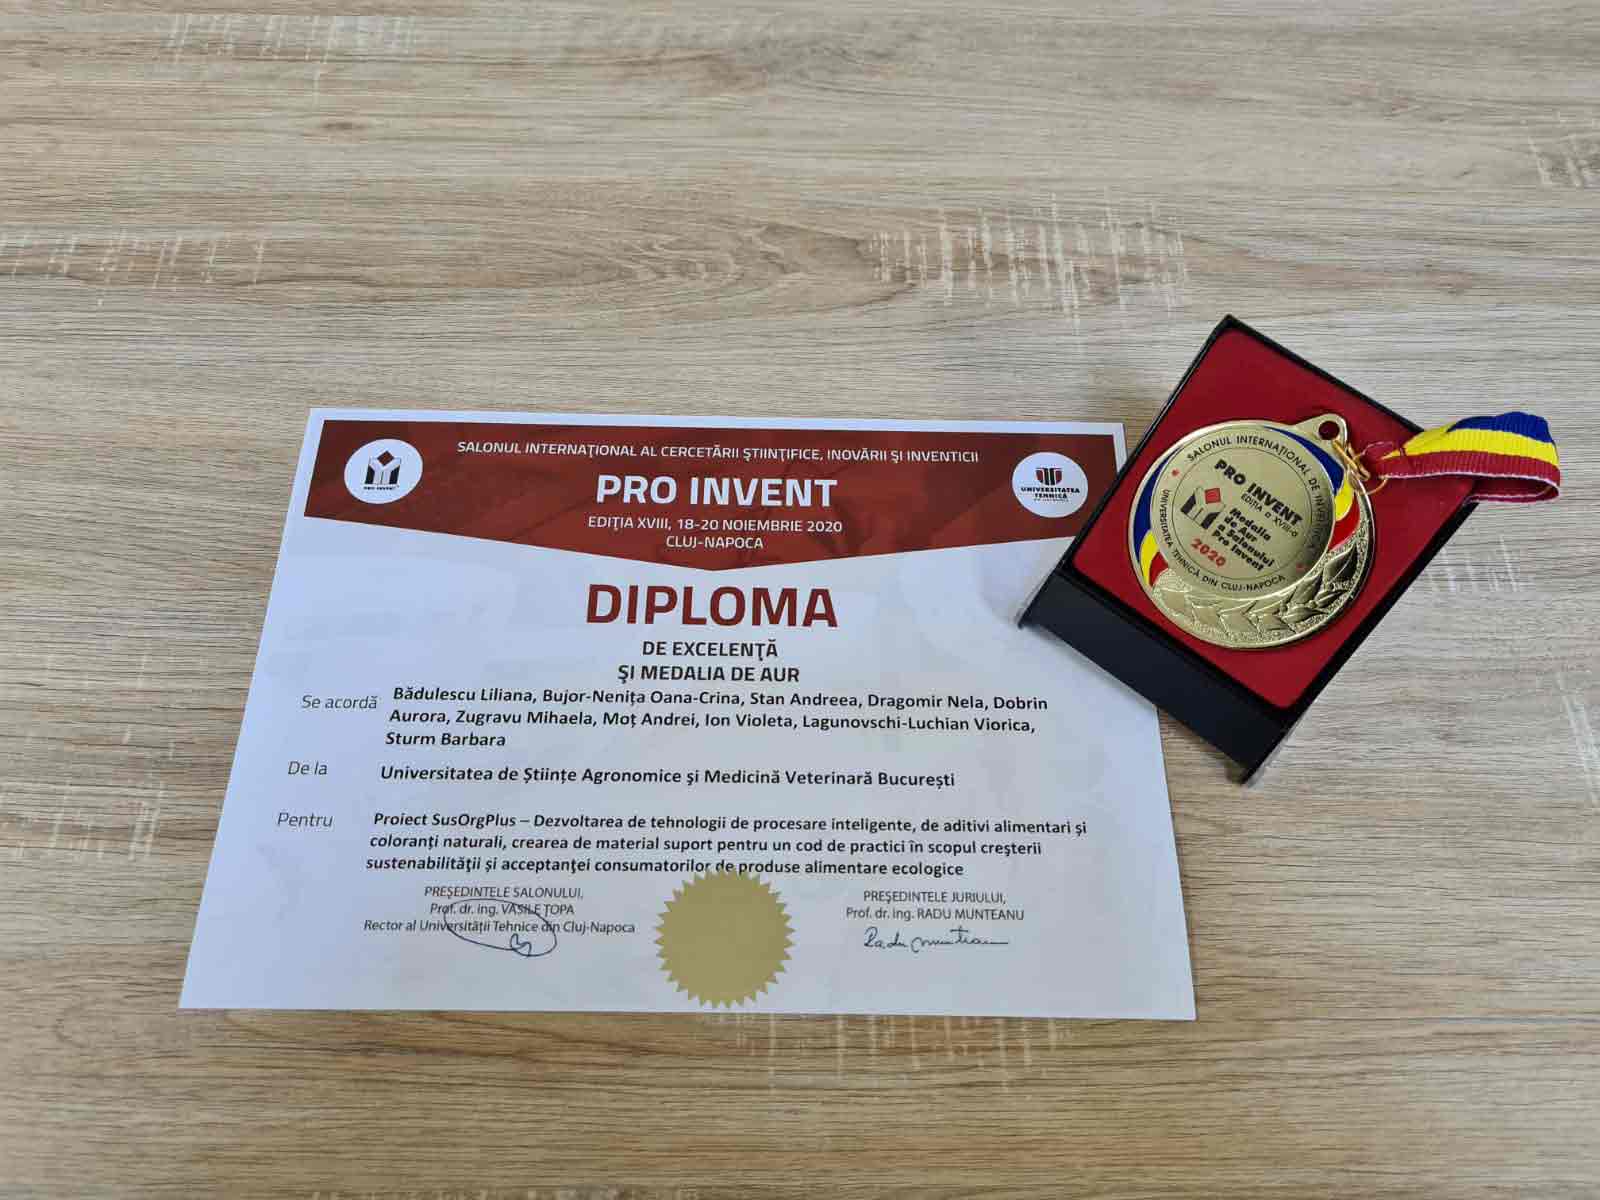 Diploma de excelenta si medalie de aur proiect SusOrgPlus